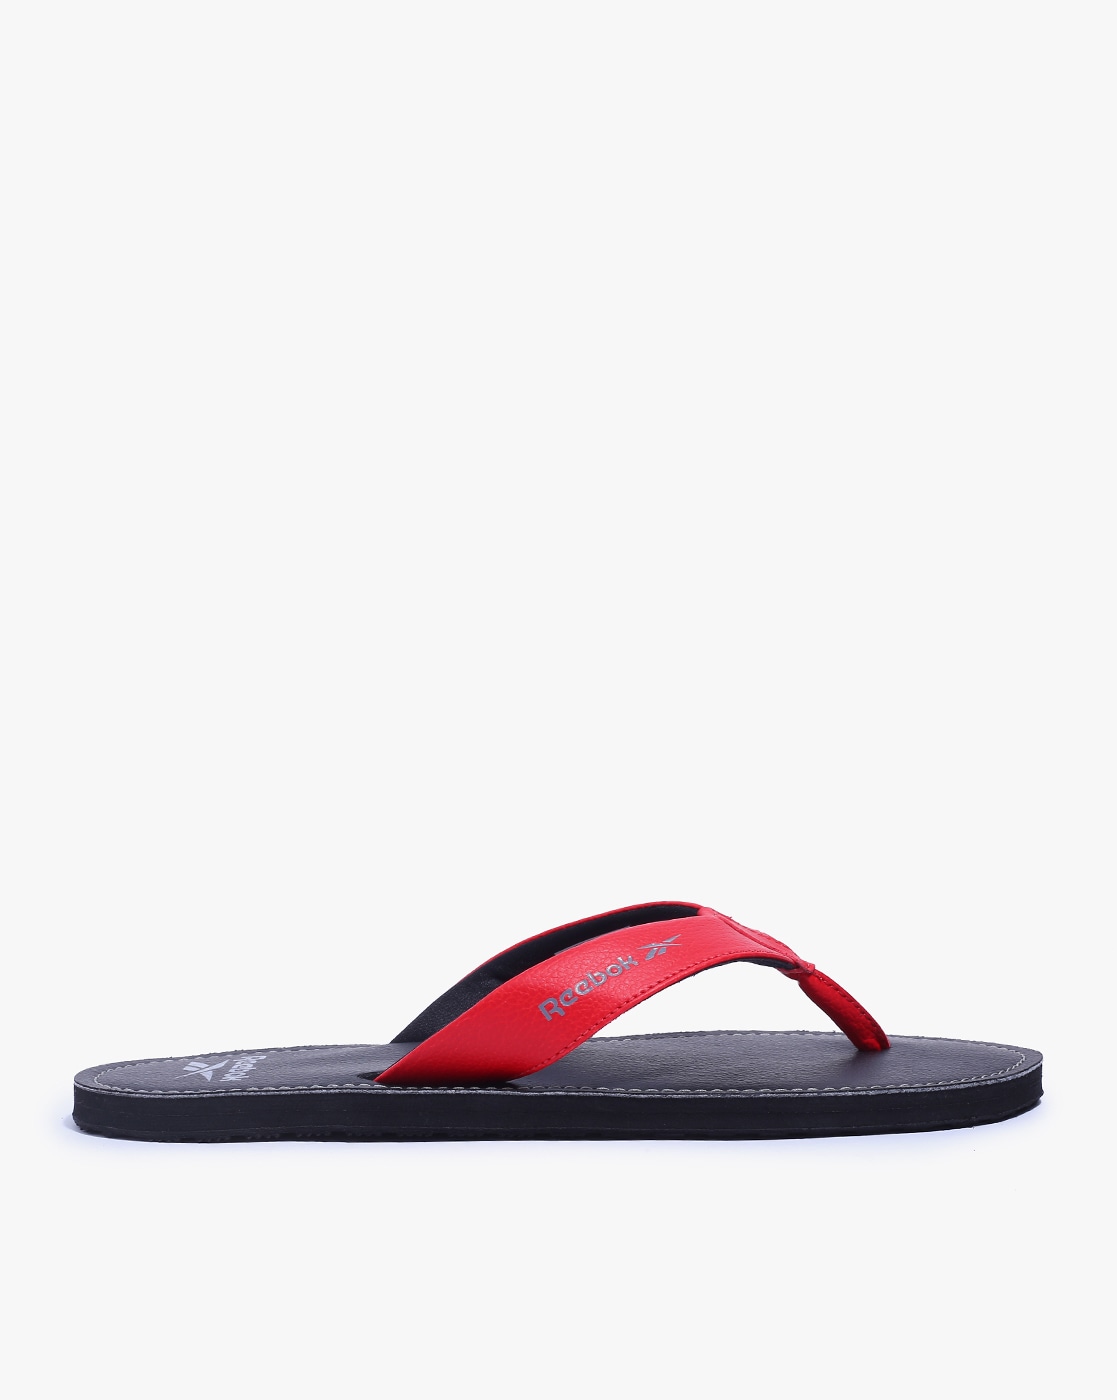 black and red flip flops